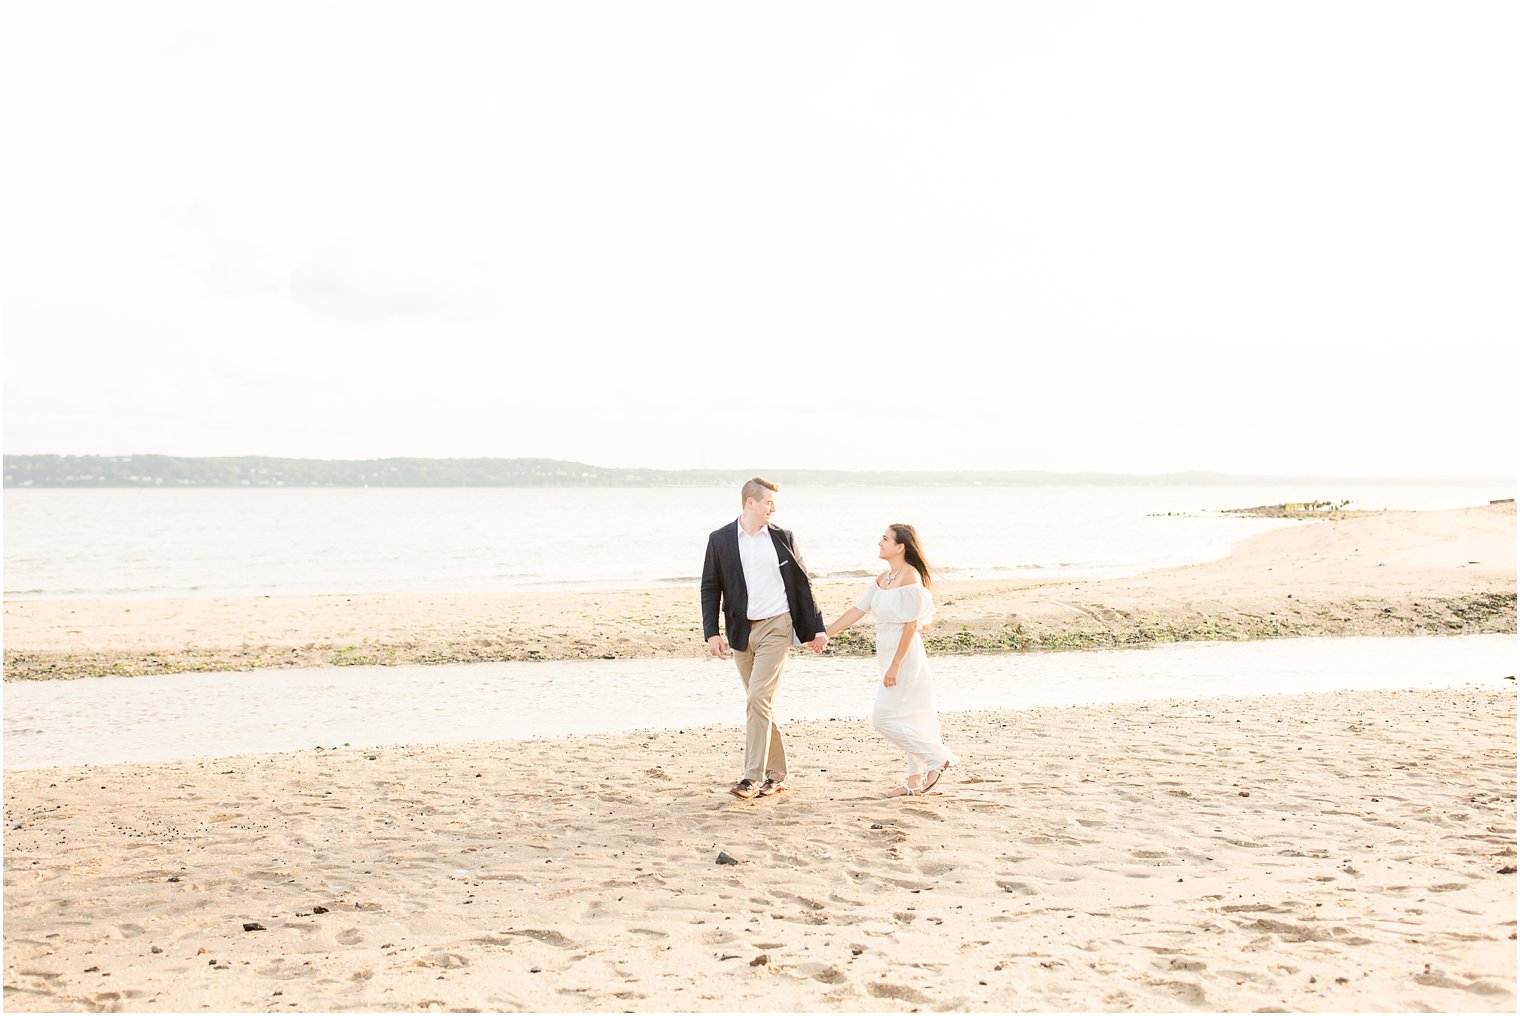 Romantic walk on beach | Engagement photos by Idalia Photography